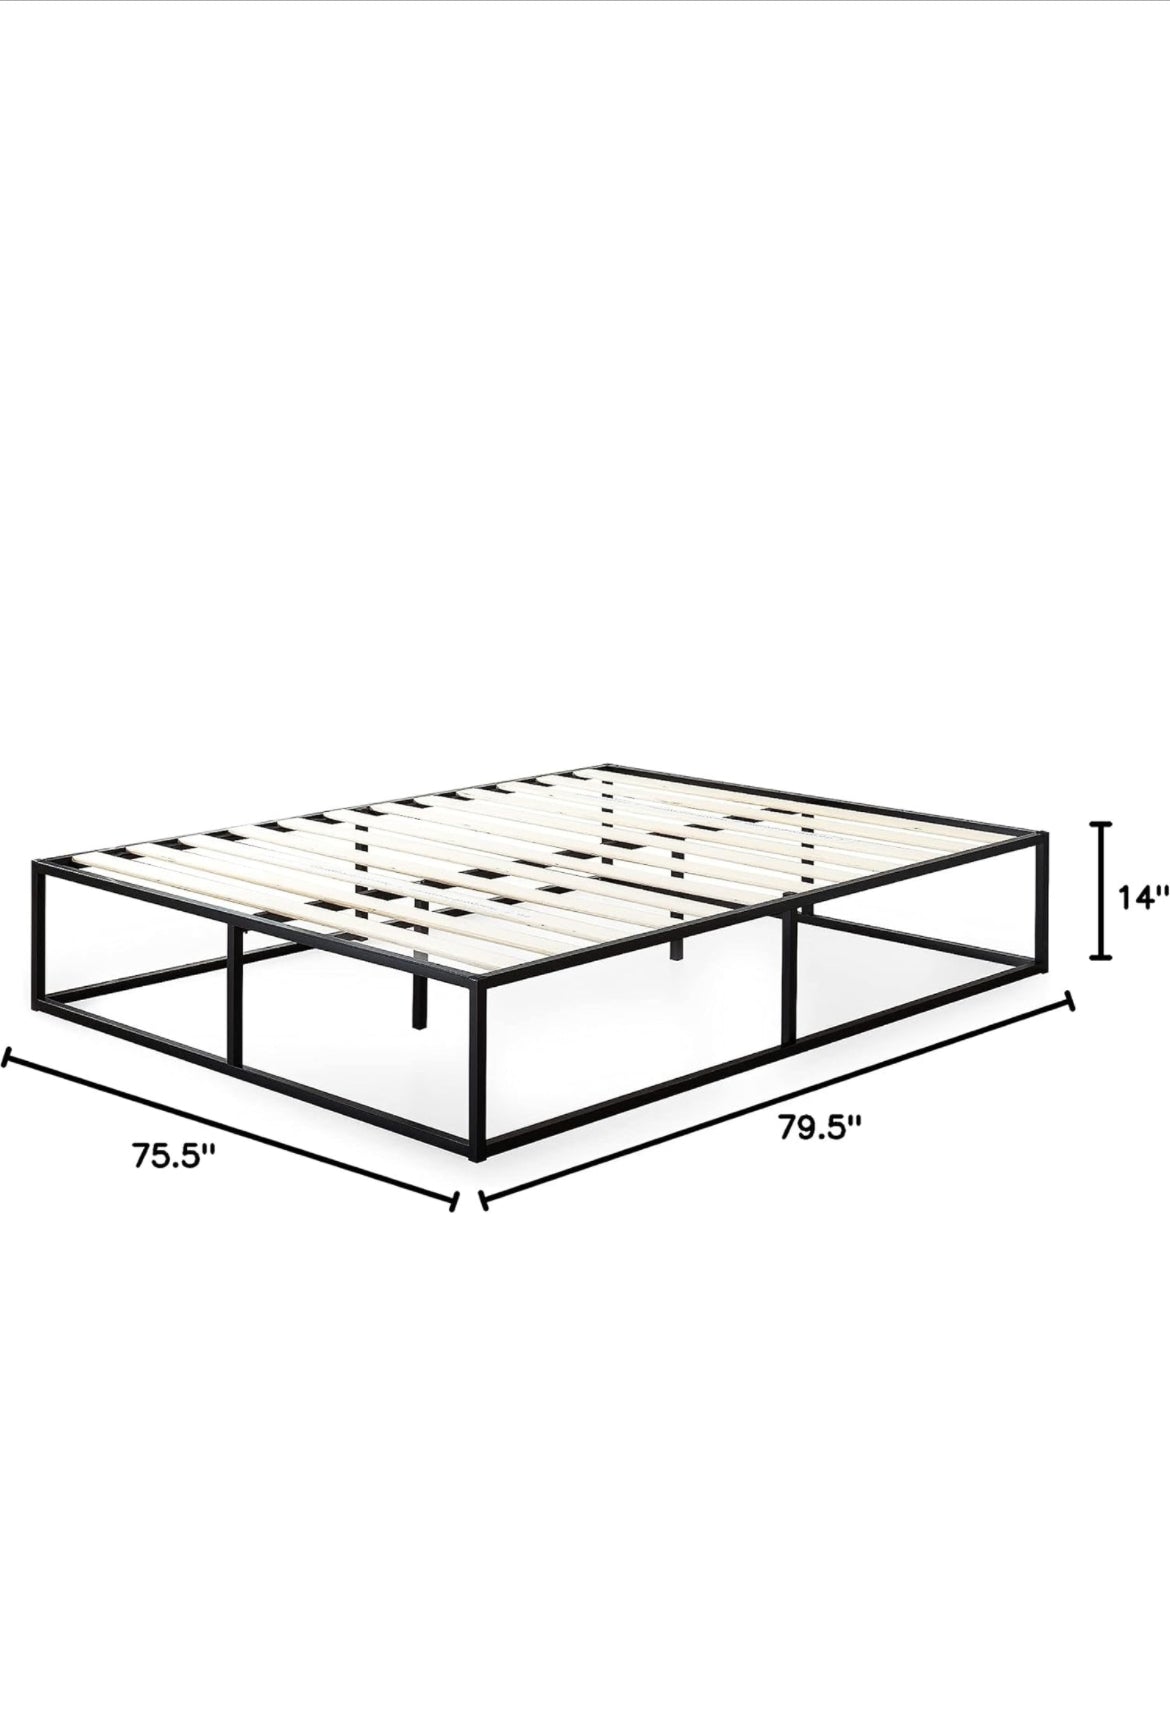 King Size - ZINUS Joseph Metal Platforma Bed Frame / Mattress Foundation / Wood Slat Support / No Box Spring Needed / Sturdy Steel Structure, King